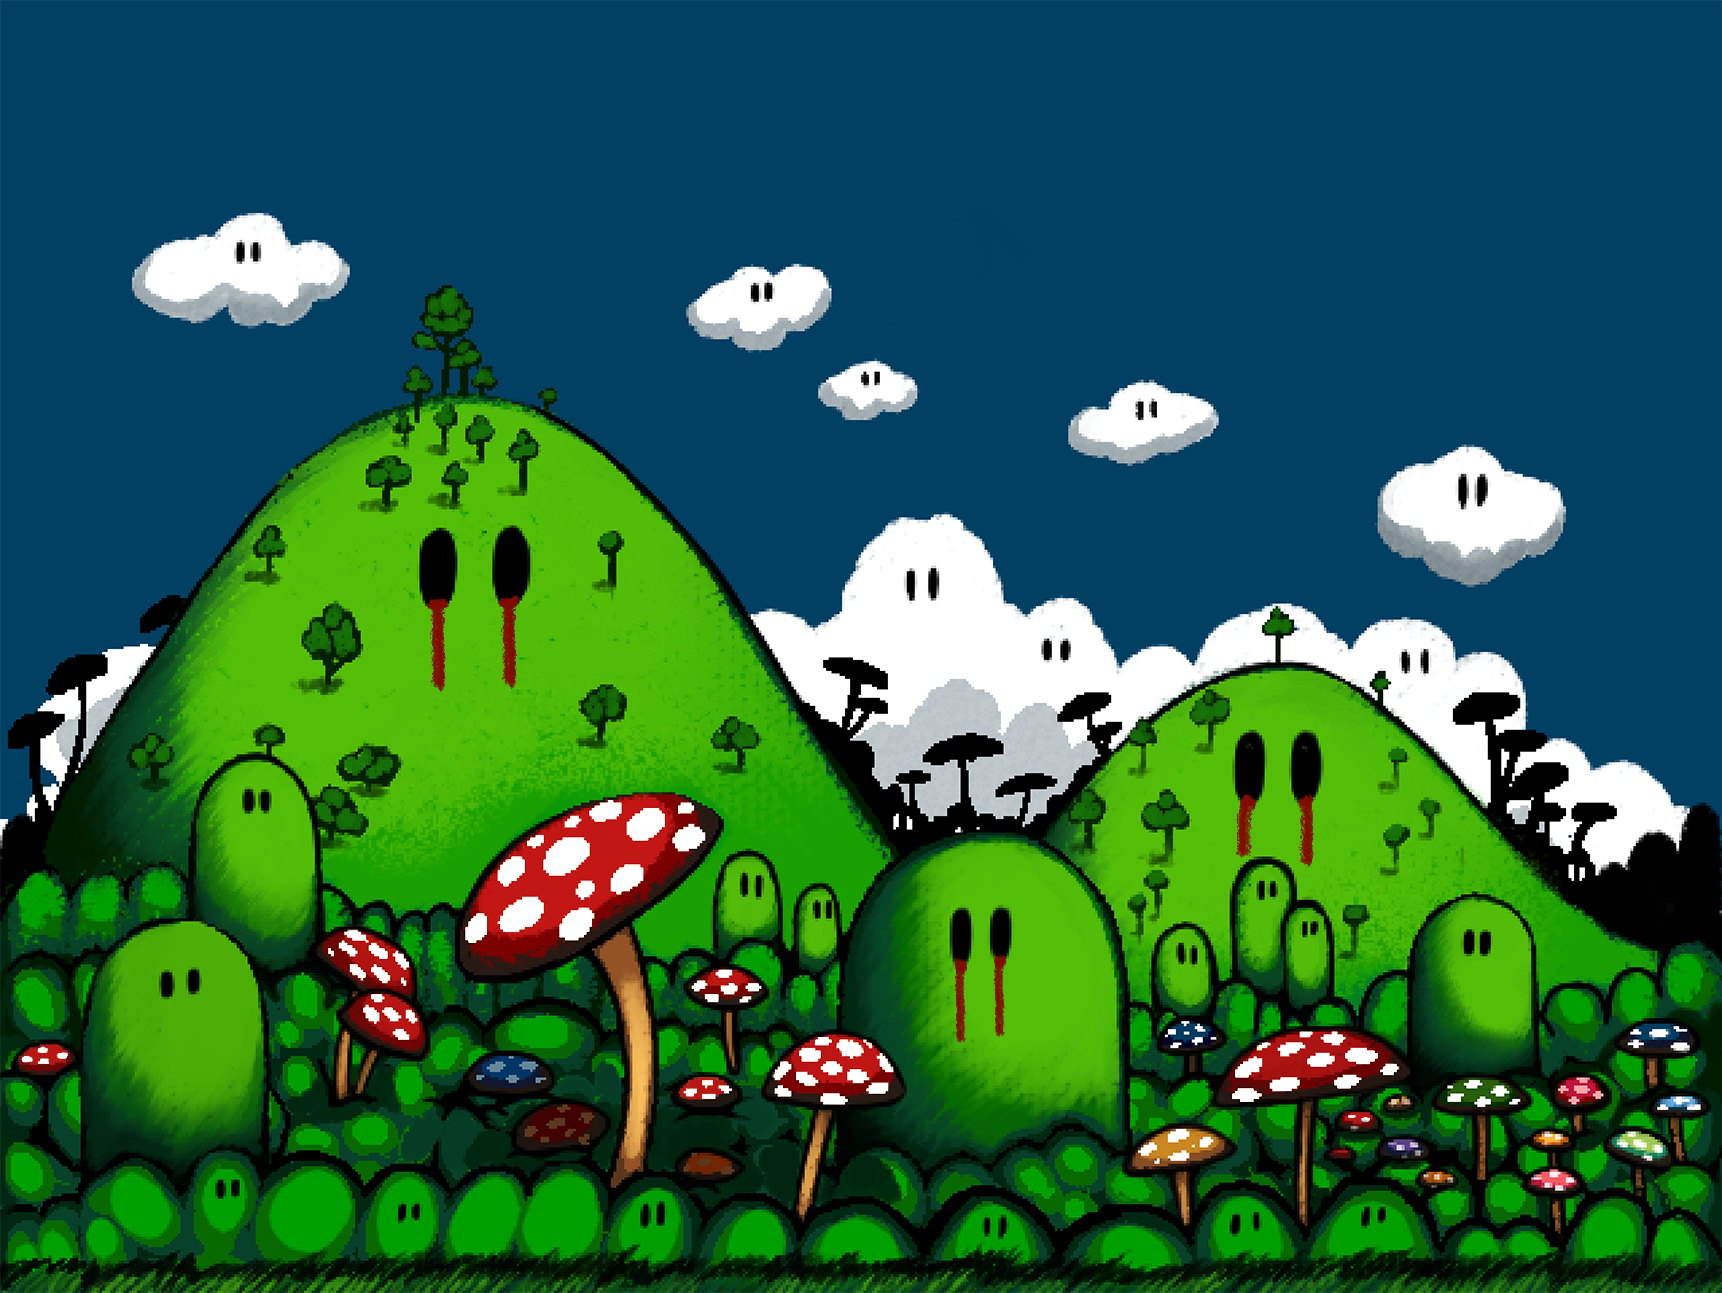 Panic in the Mushroom Kingdom 2